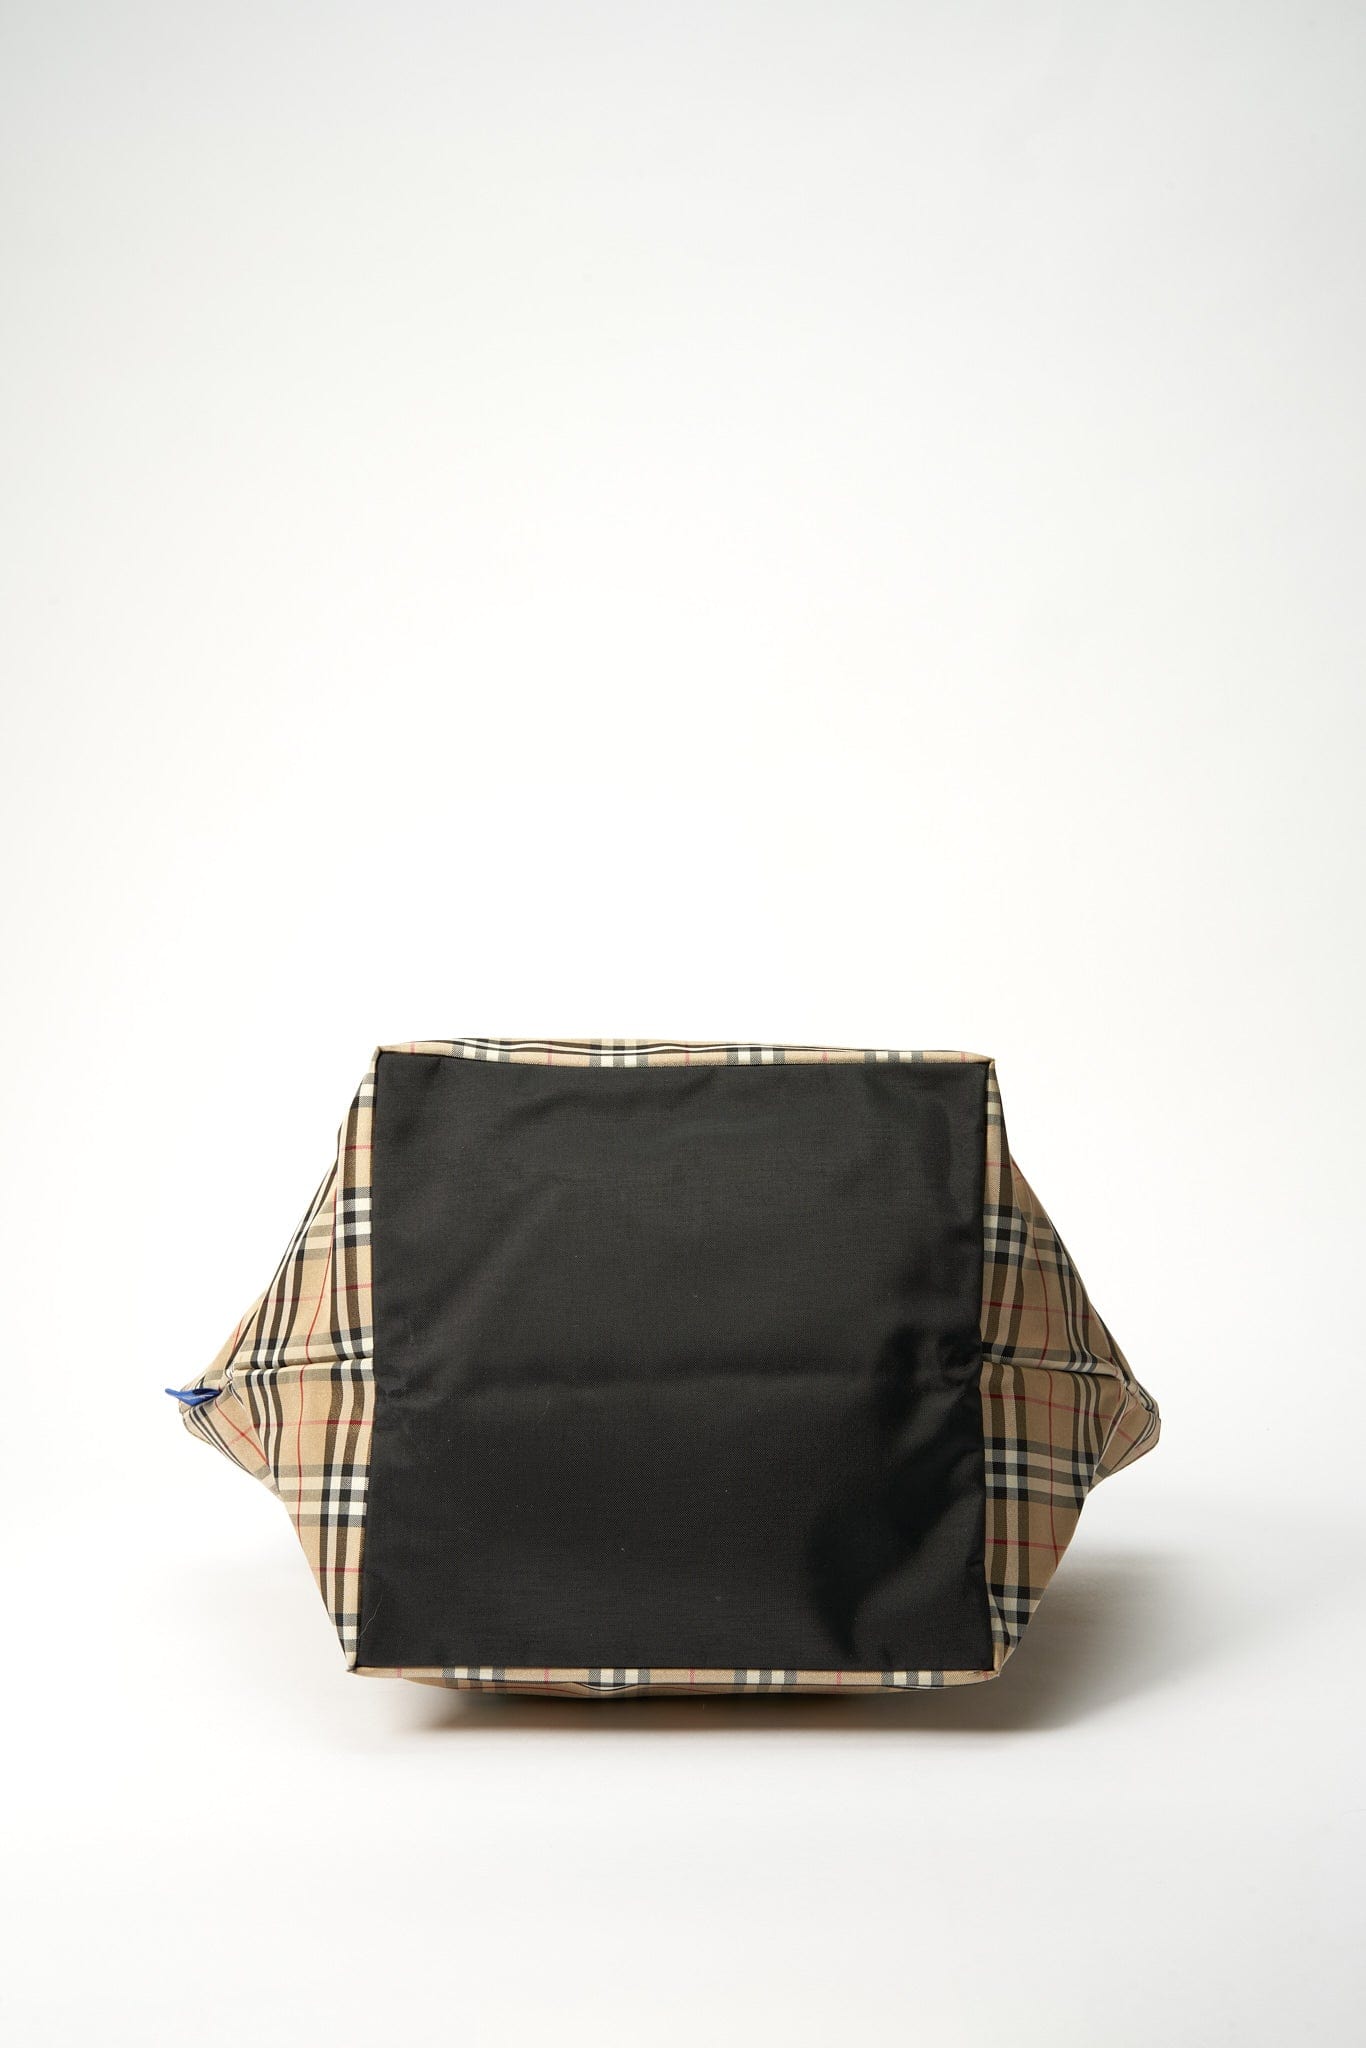 Vintage Burberry khaki and brown nova check tote bag. Classic